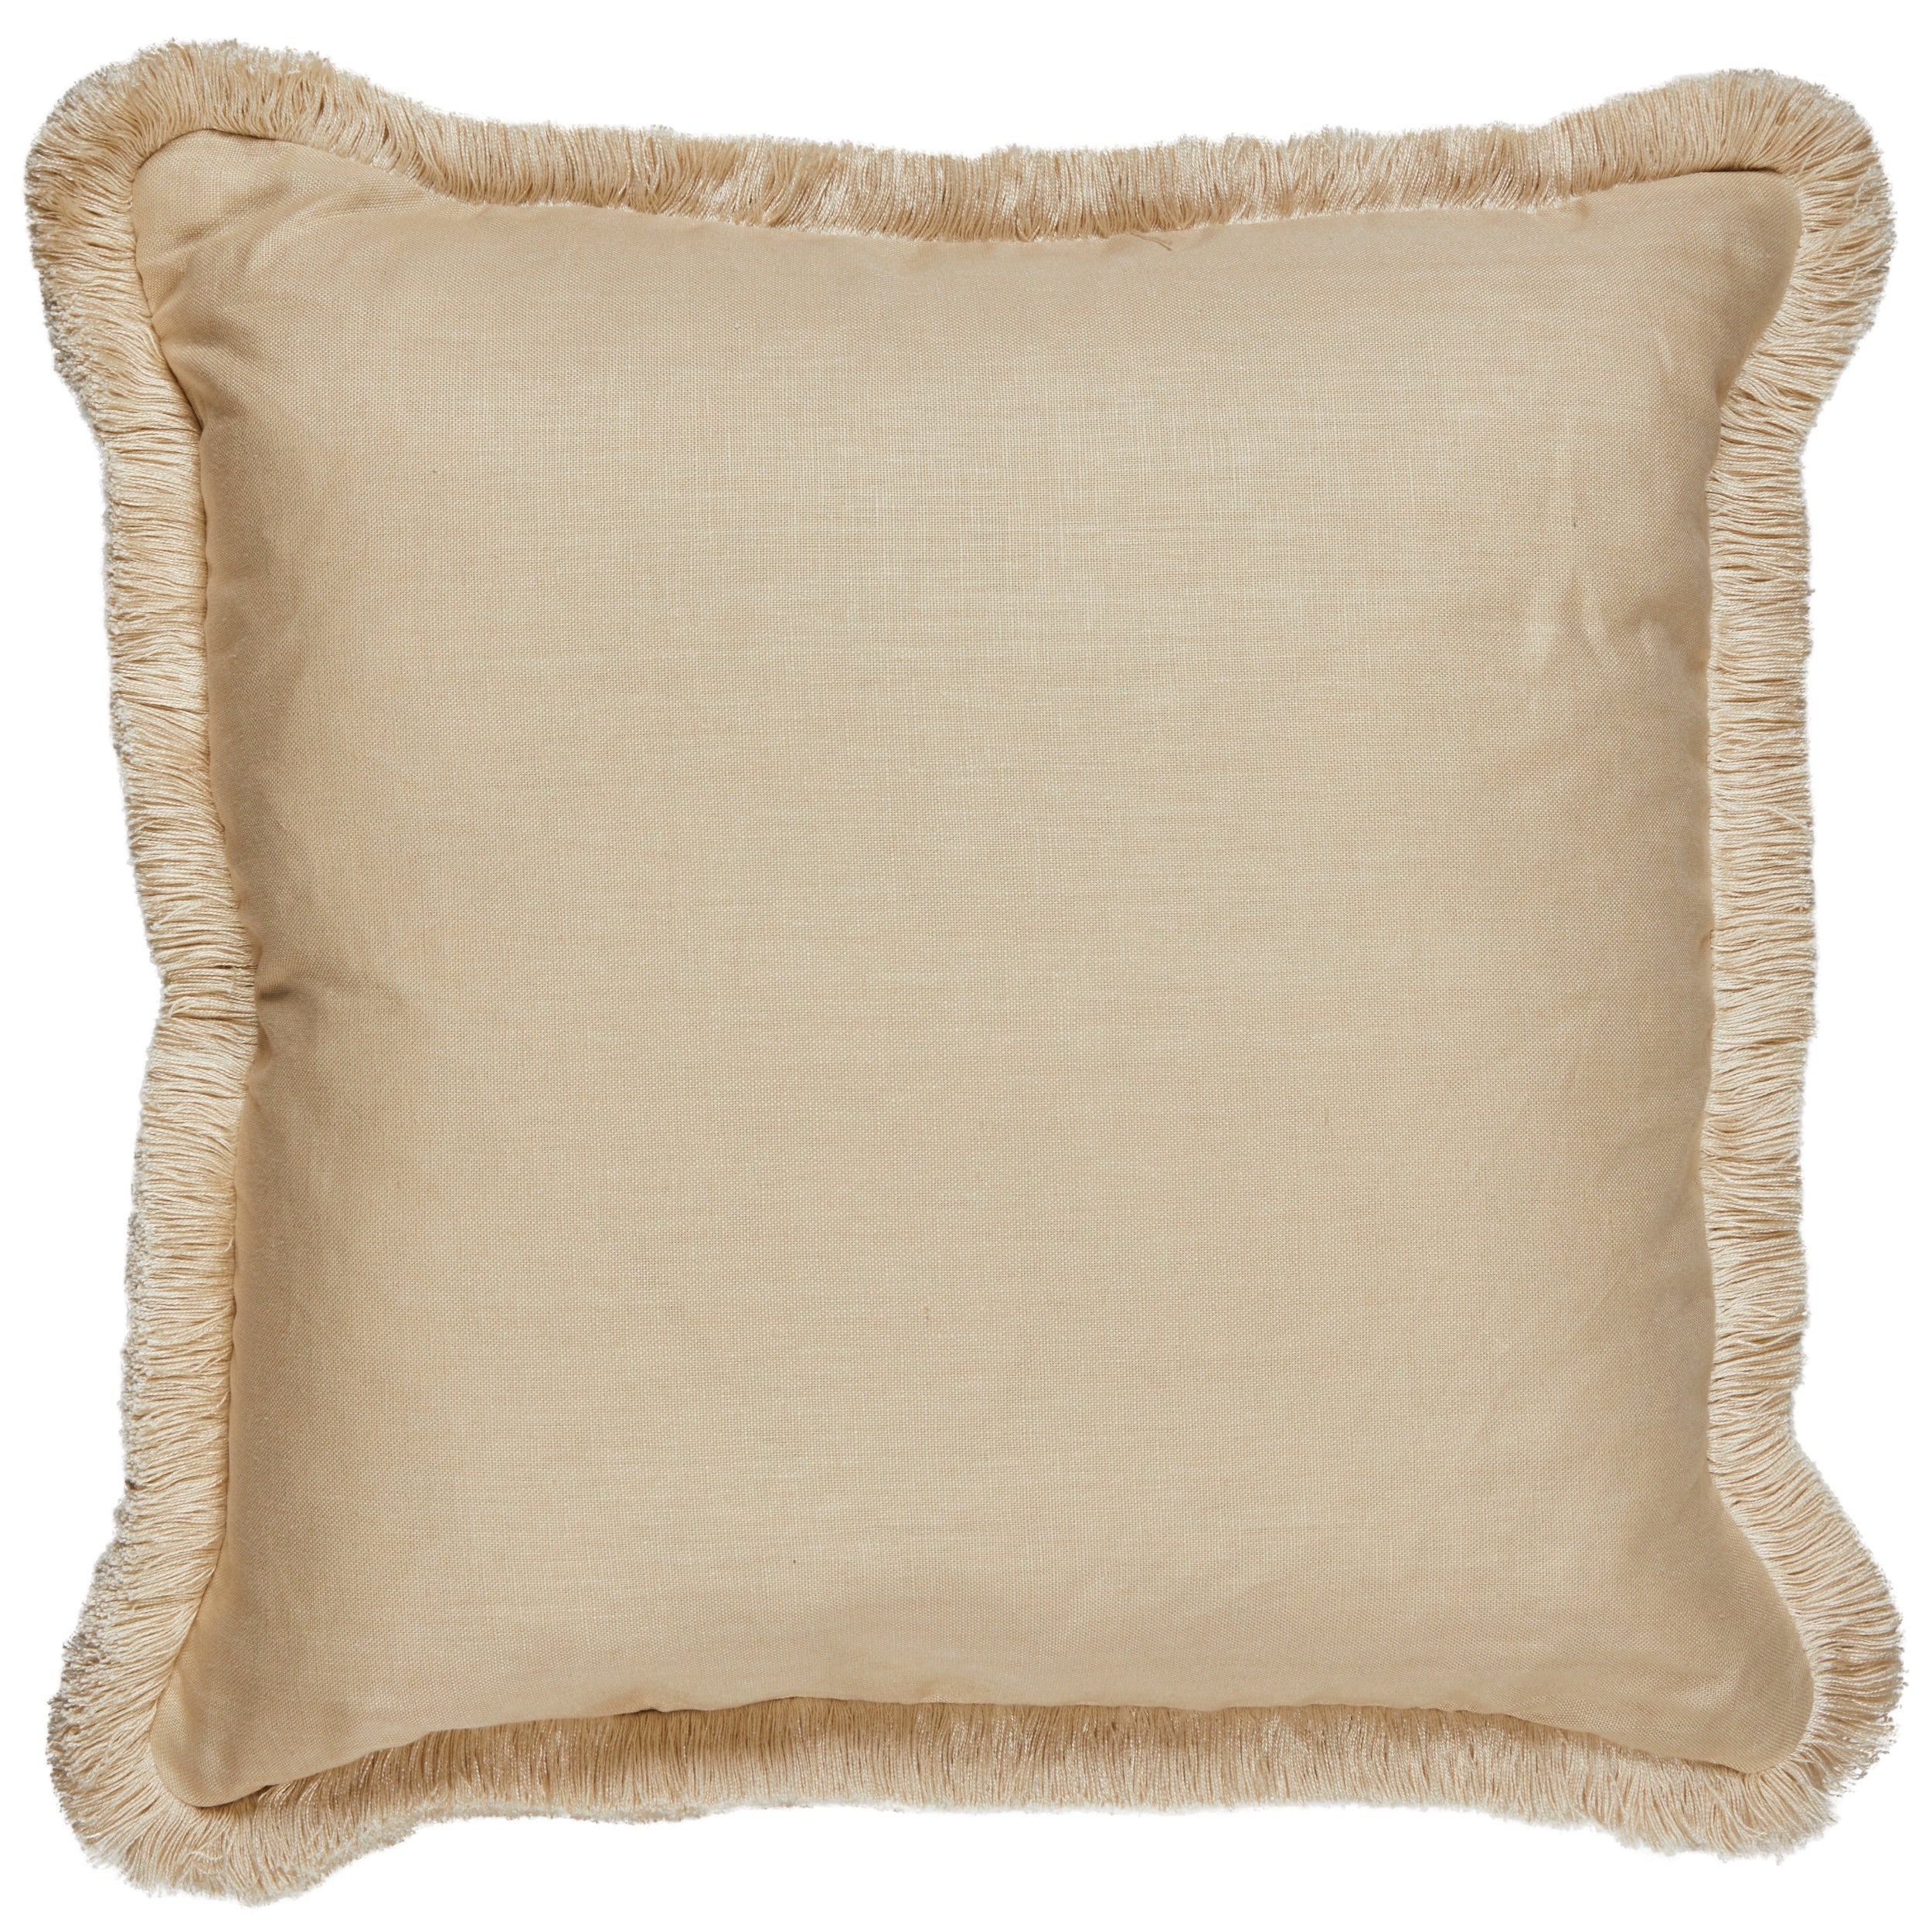 Enid's Garland Warmer Back Cushion  with a Brush Fringe